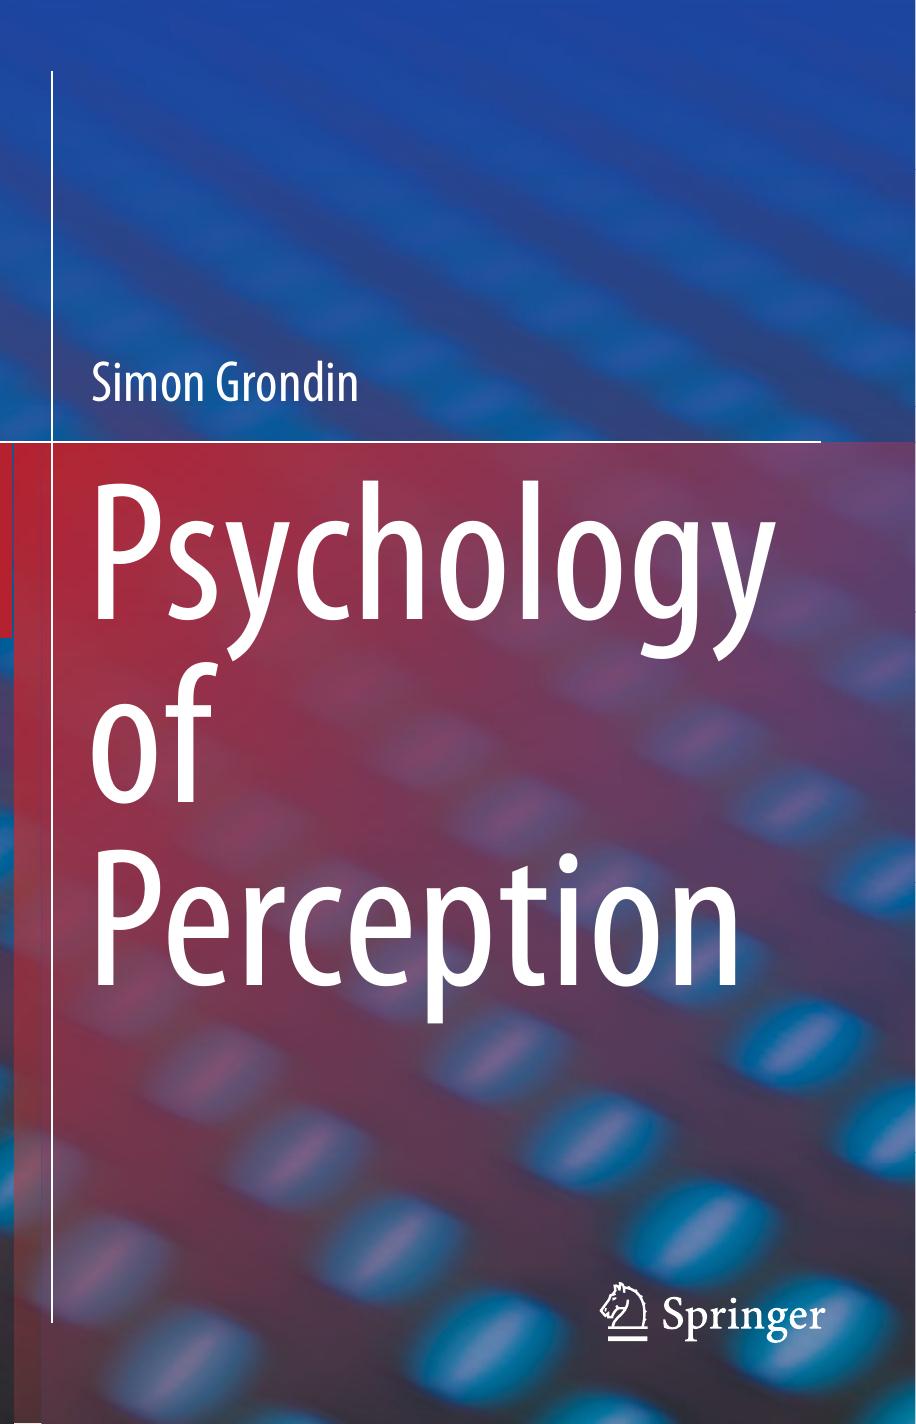 Psychology of Perception by Simon Grondin